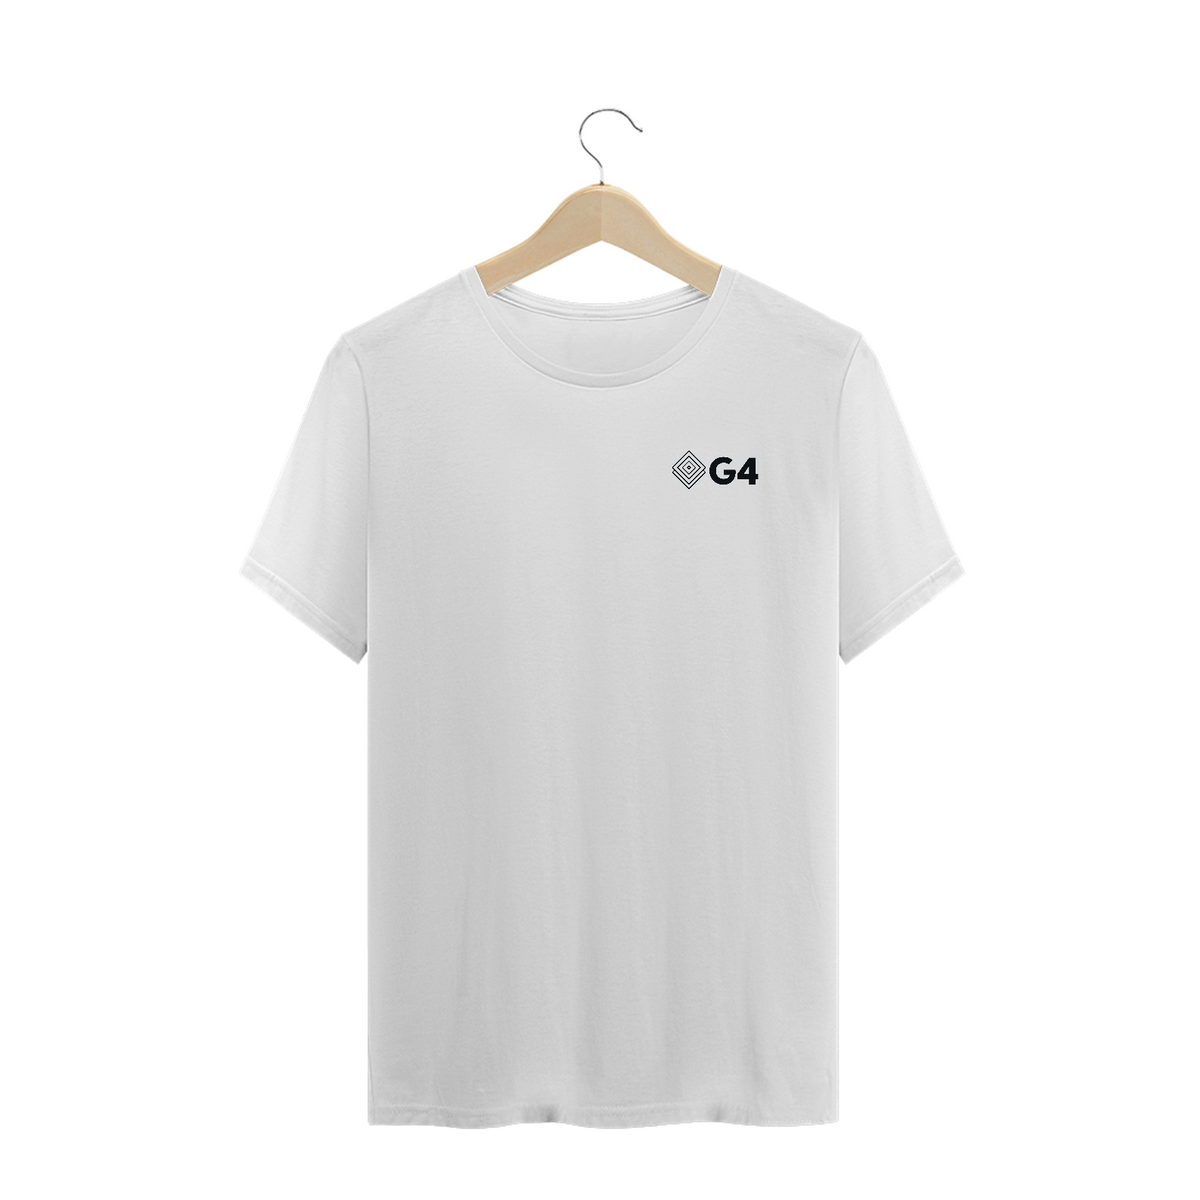 Nome do produto: Camiseta G4 - LOGO PEQUENO 